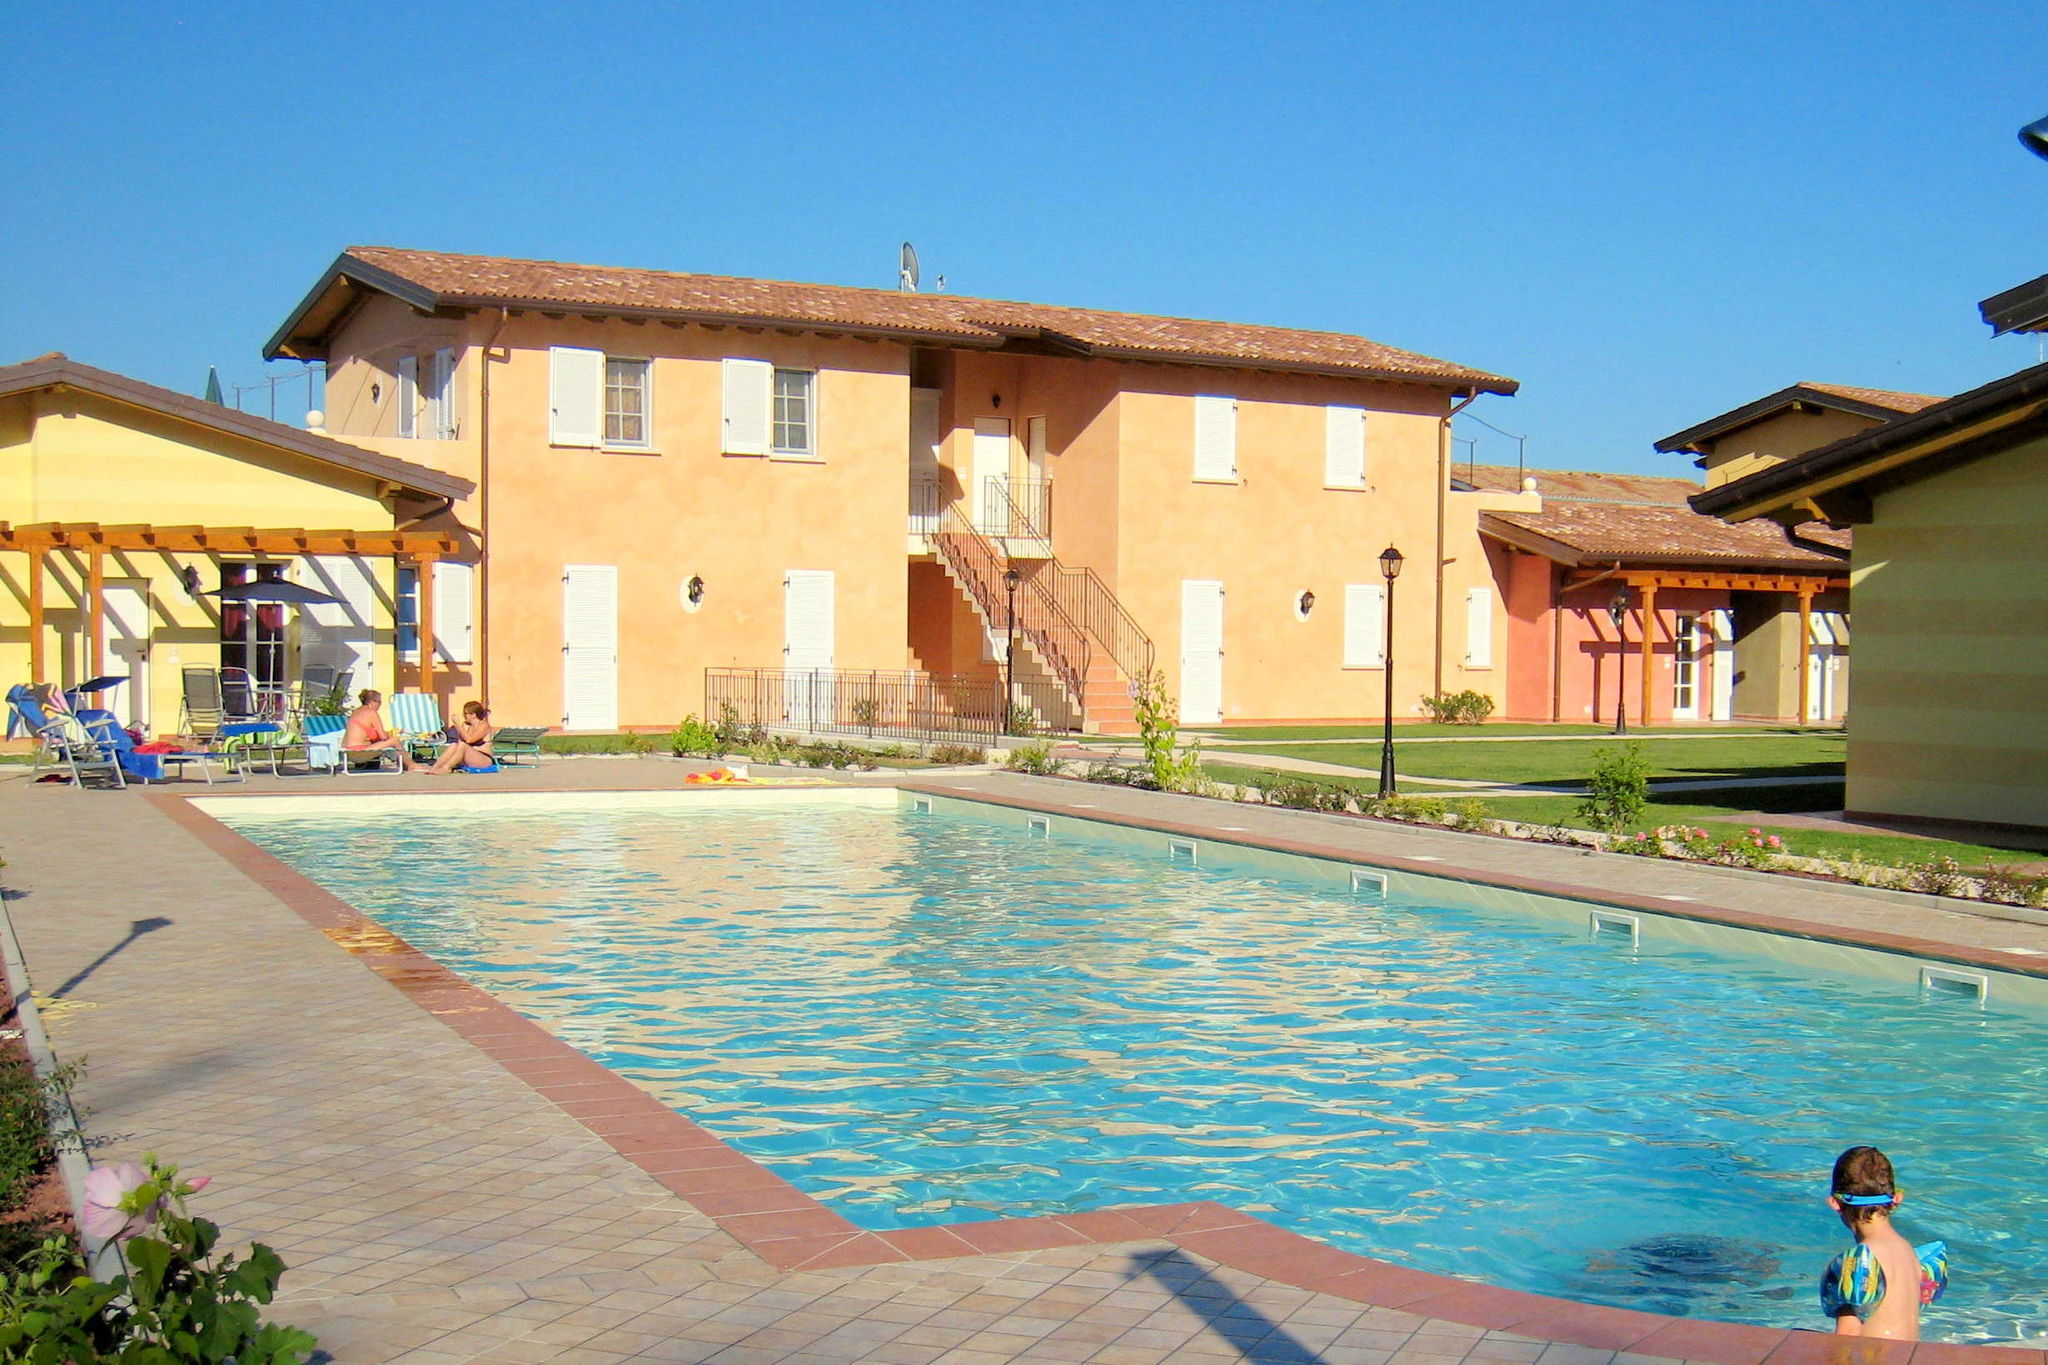 Residence aan het Gardameer, Manerba del Garda, in groen gebied van 11000 m2